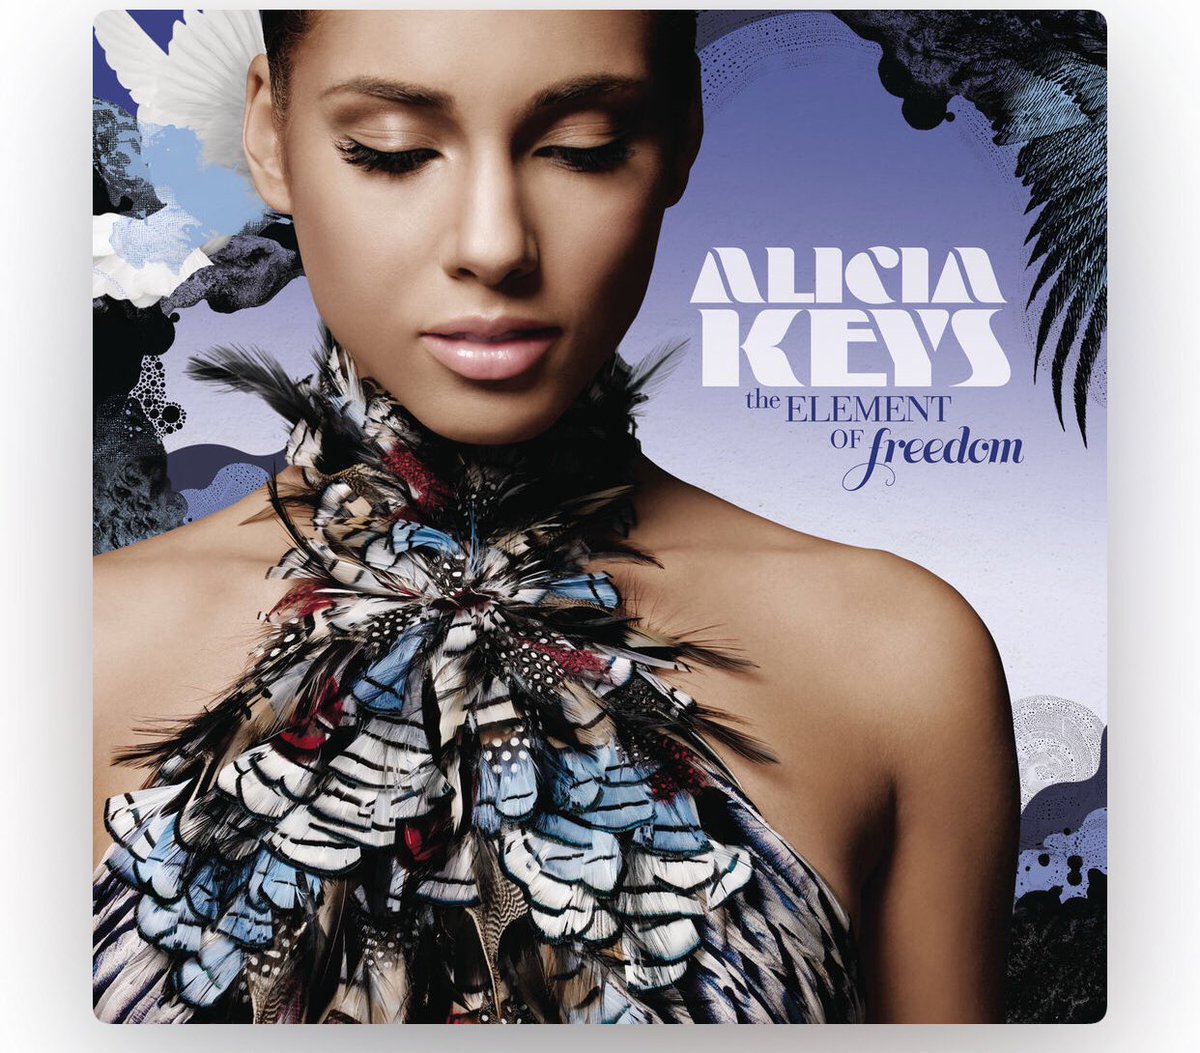 46. Alicia Keys - Try sleeping with a broken heart.